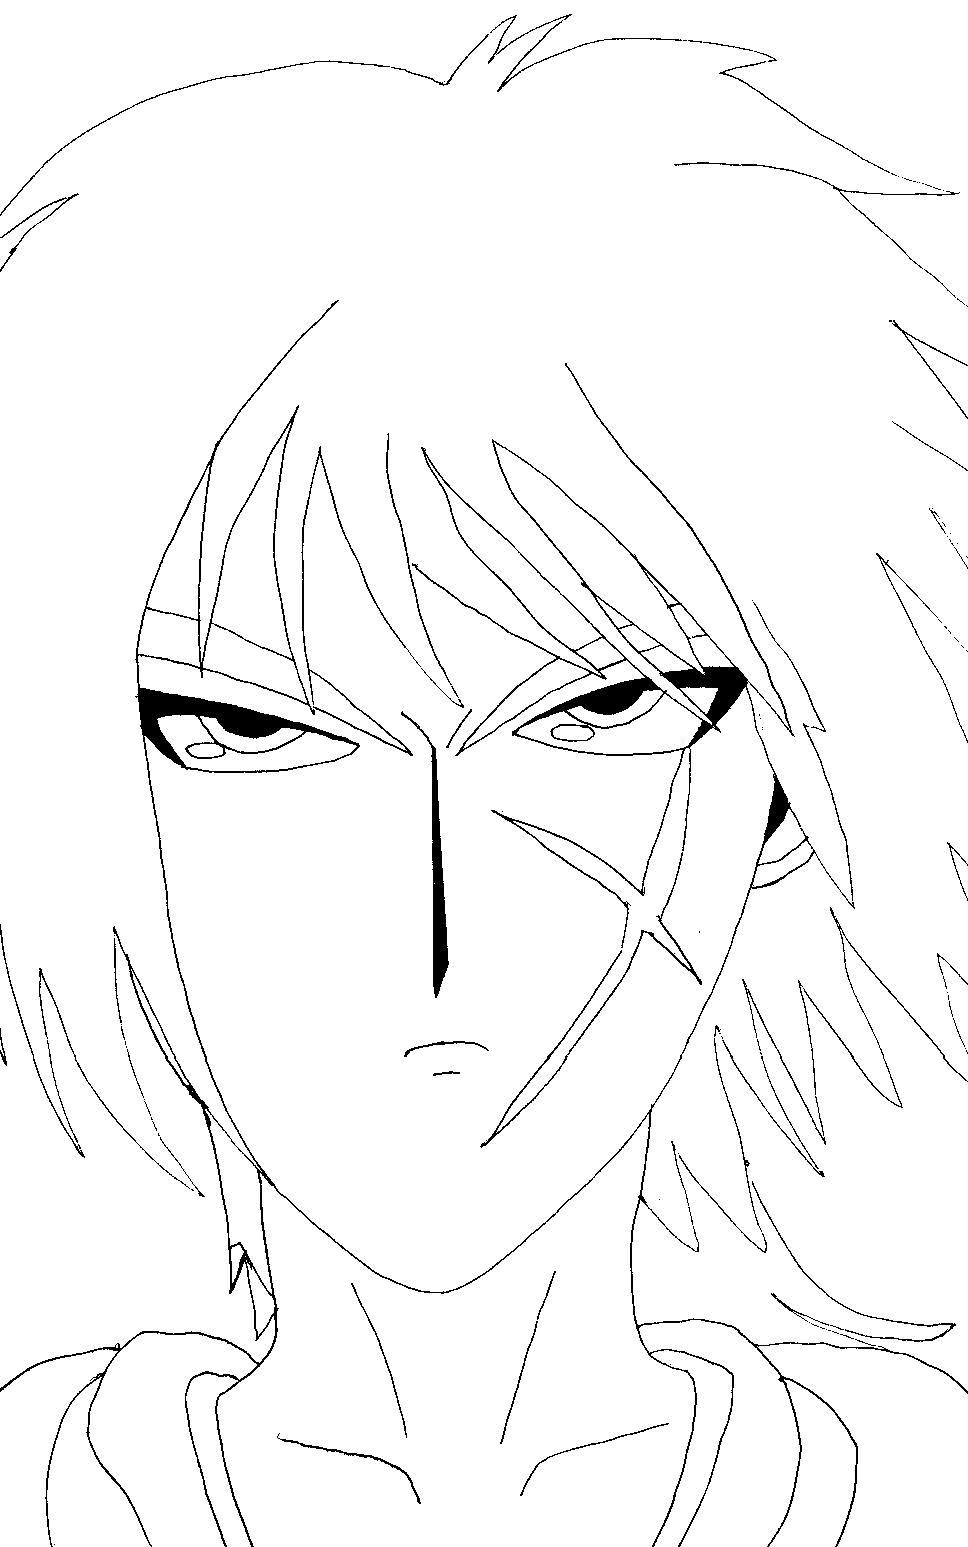 Angry Kenshin by Jessea